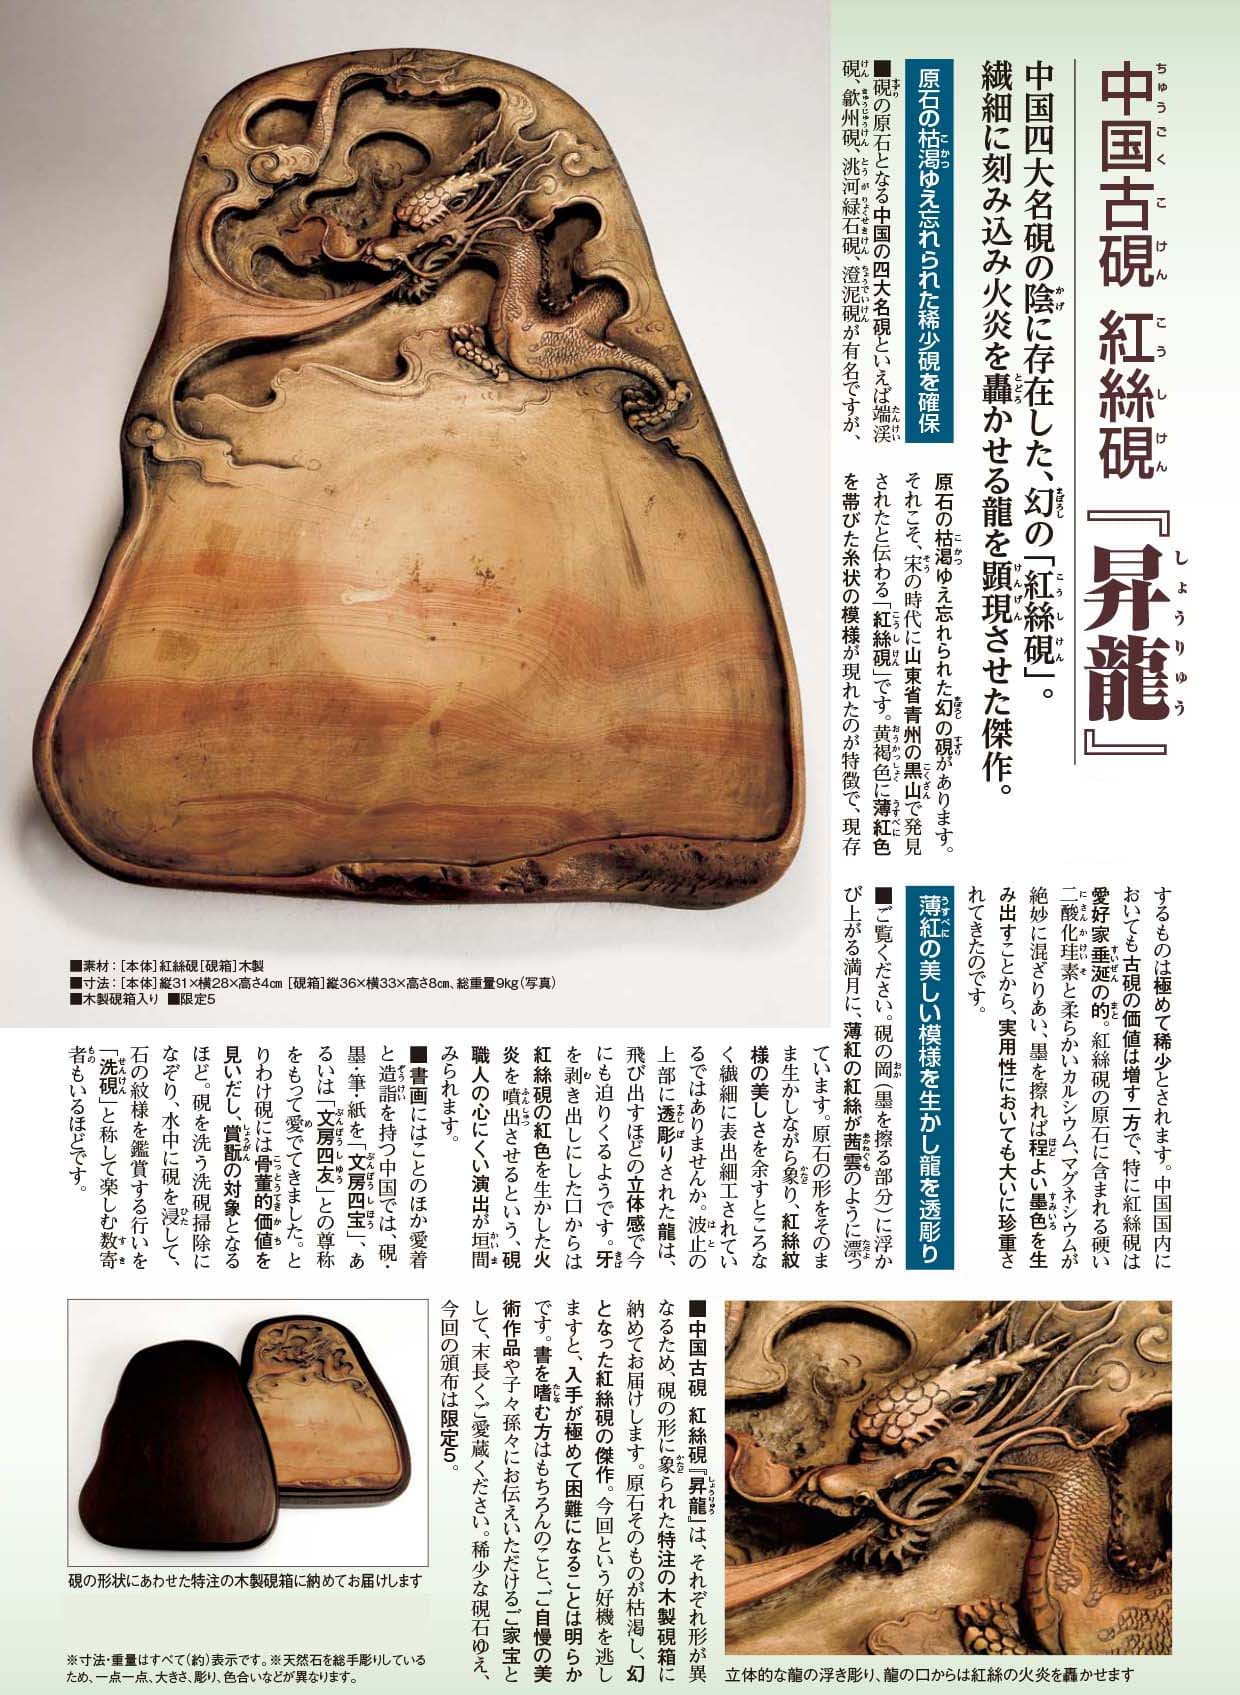 中国古硯 紅絲硯『昇龍』 | 東京書芸館公式通販ウェブサイト - 【東京